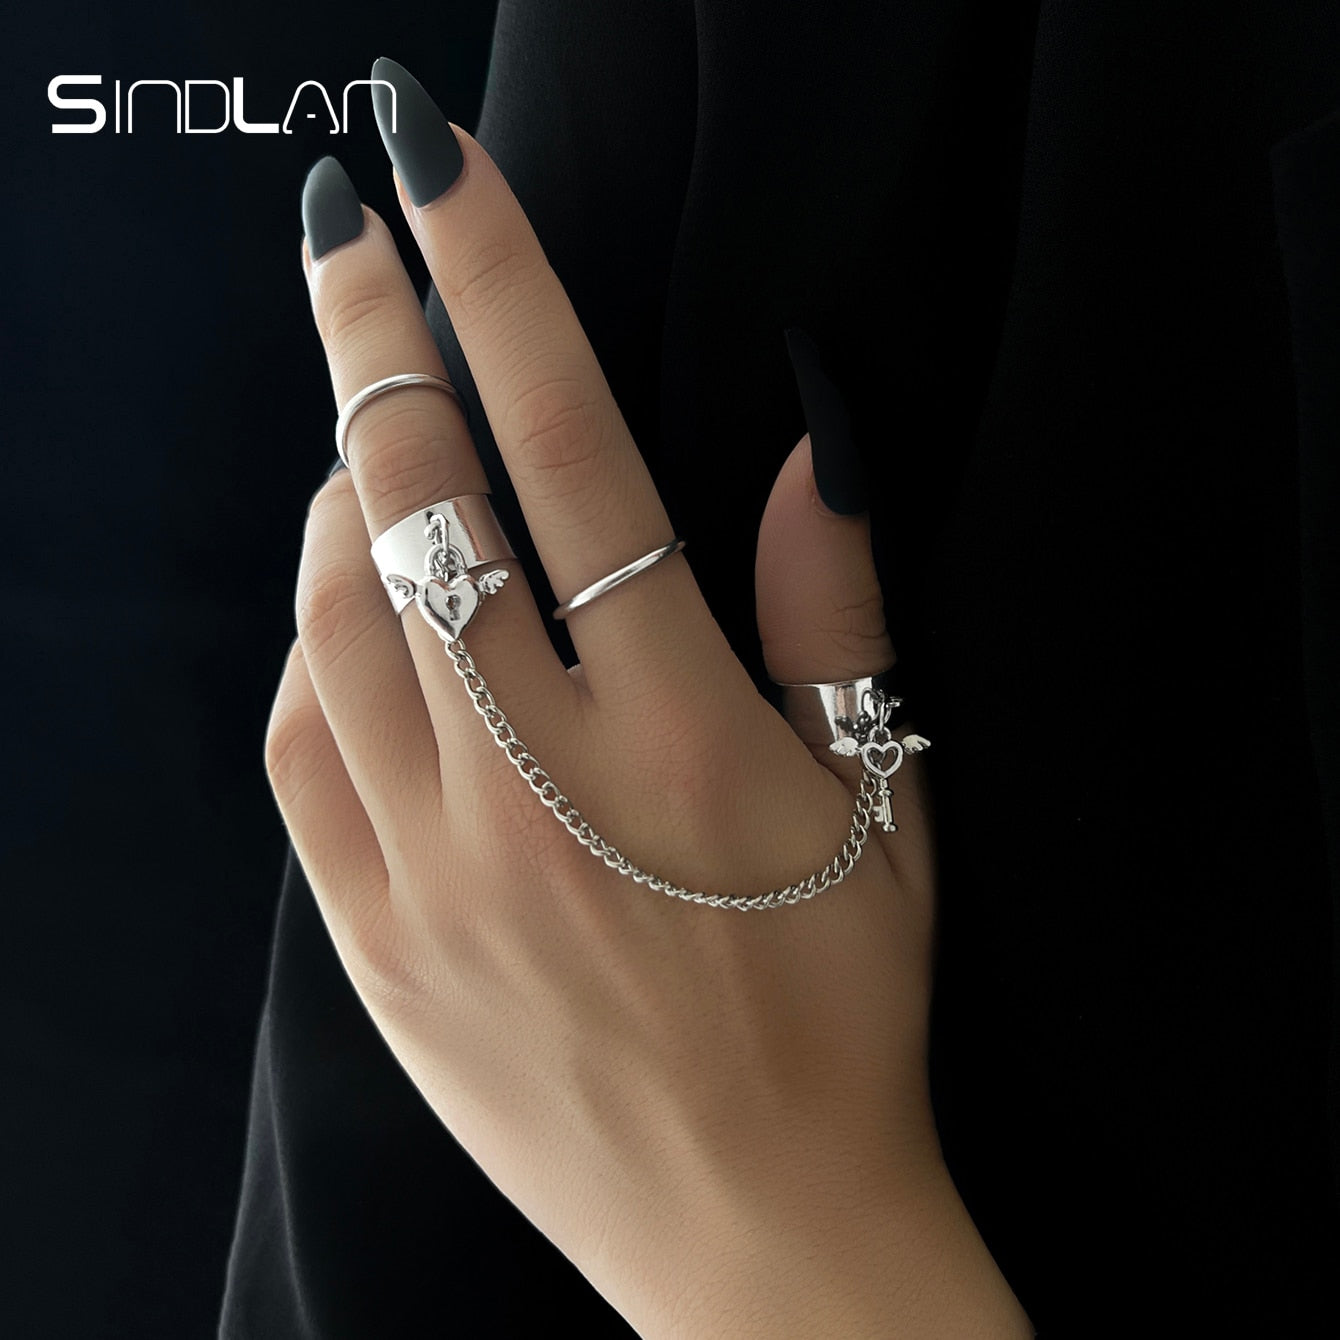 Sindlan Punk Geometric Silver Color Chain Wrist Bracelet for Men Ring Charm Set Couple Emo Fashion Jewelry Gifts Pulsera Mujer